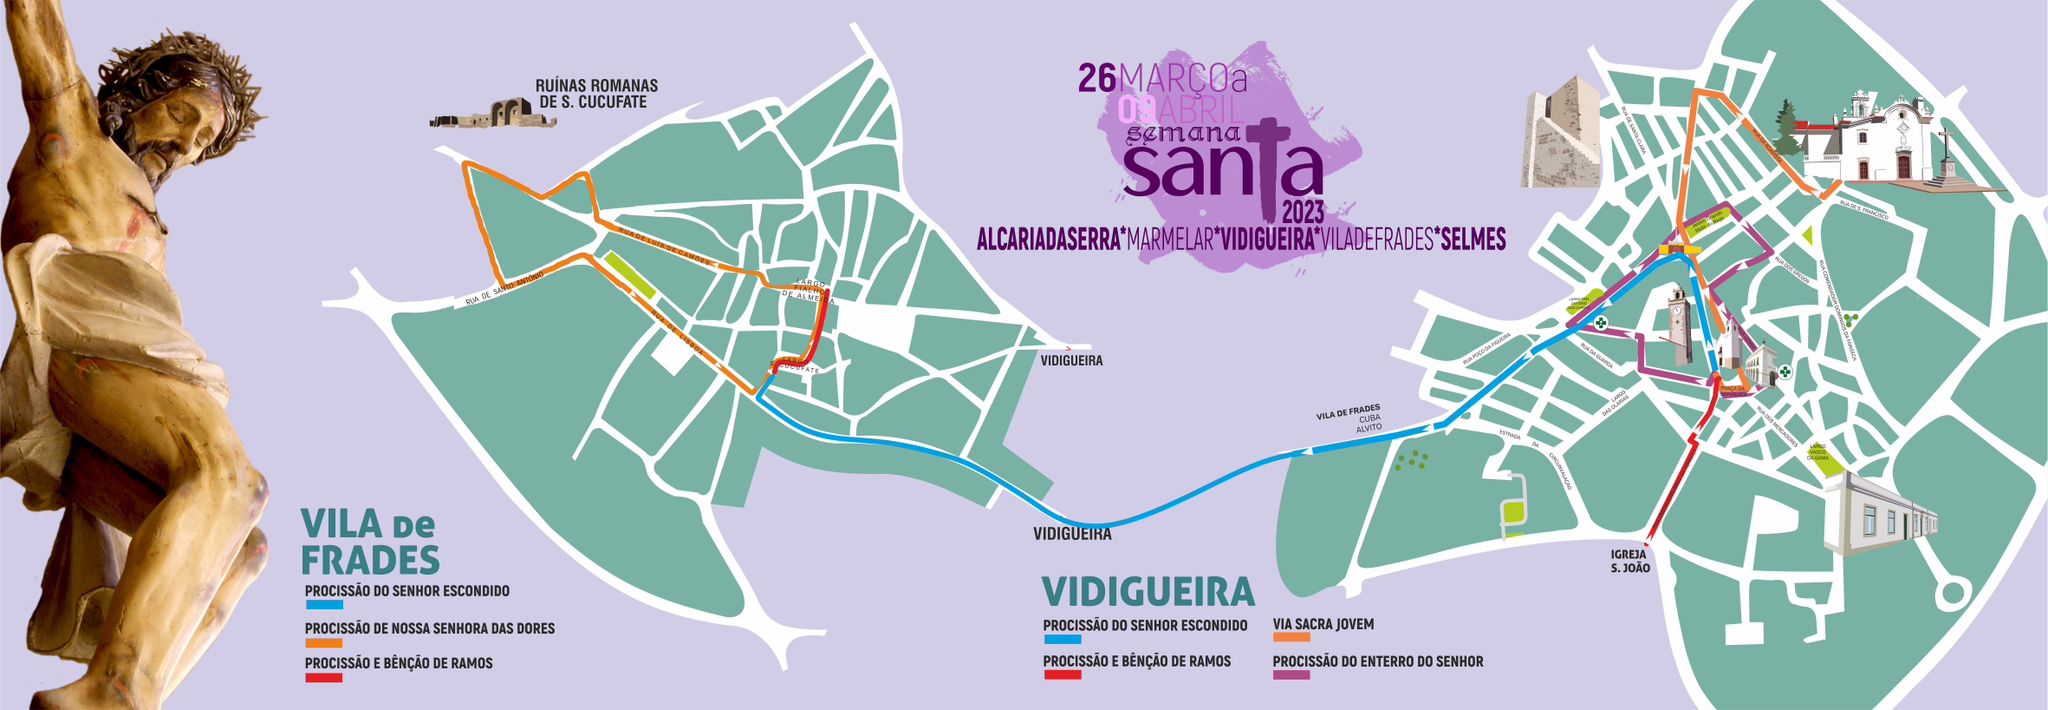 Mapa de Vila de Frades e Vidigueira para as Festividades da Semana Santa 2023